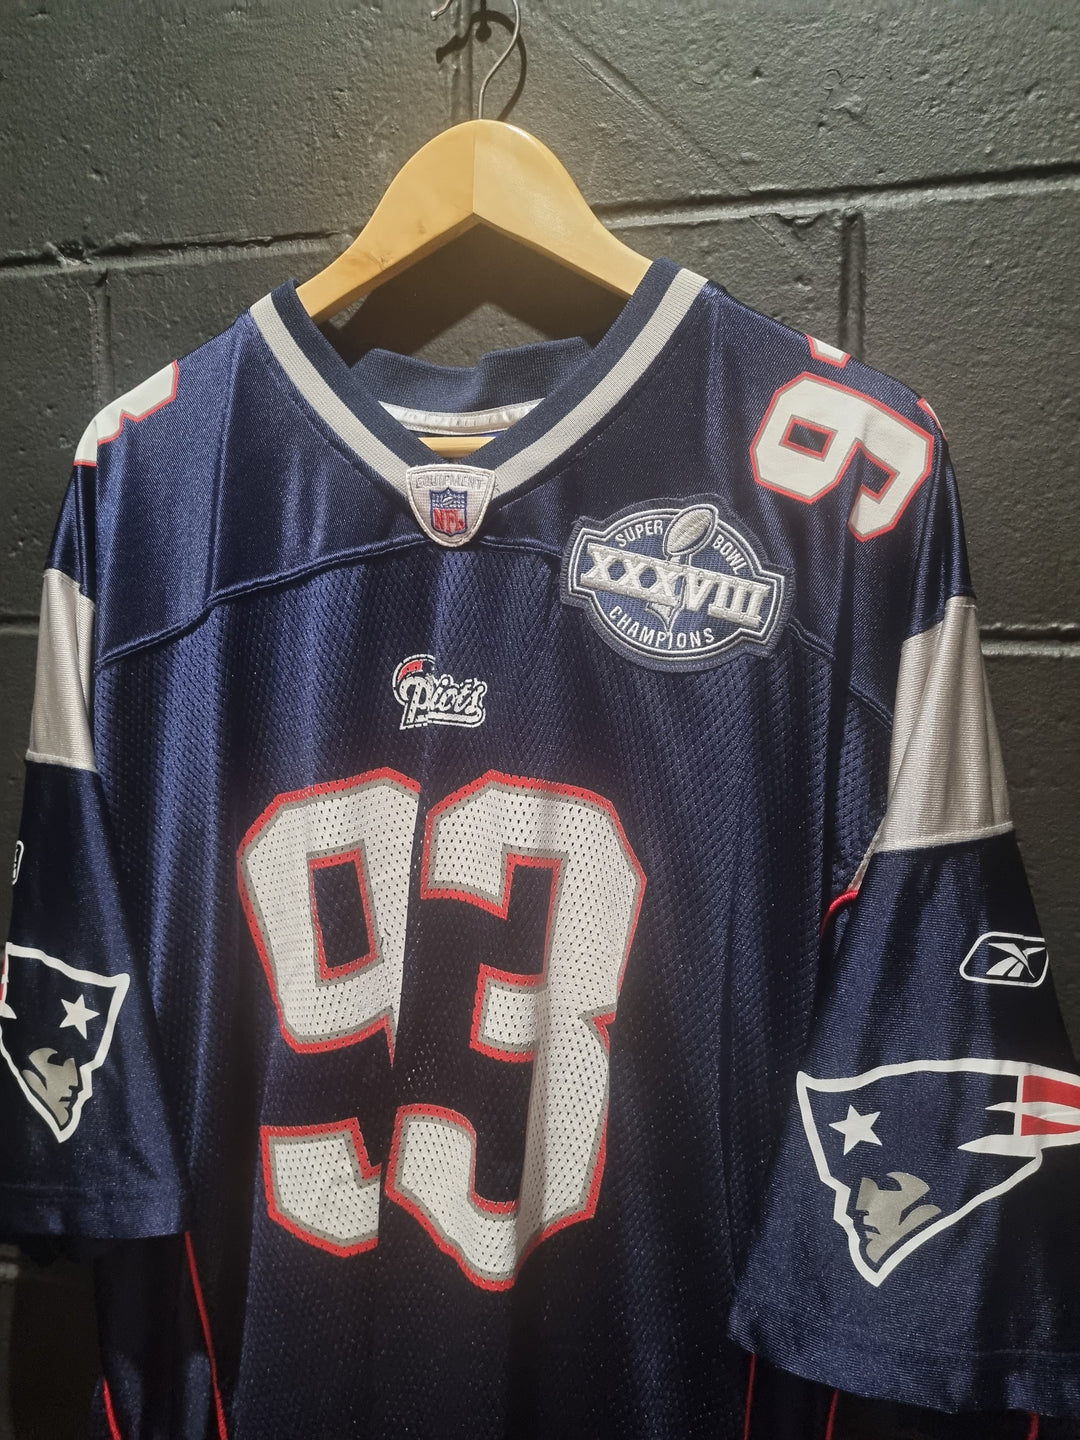 Patriots Seymour Reebok Super Bowl XXXVIII XL